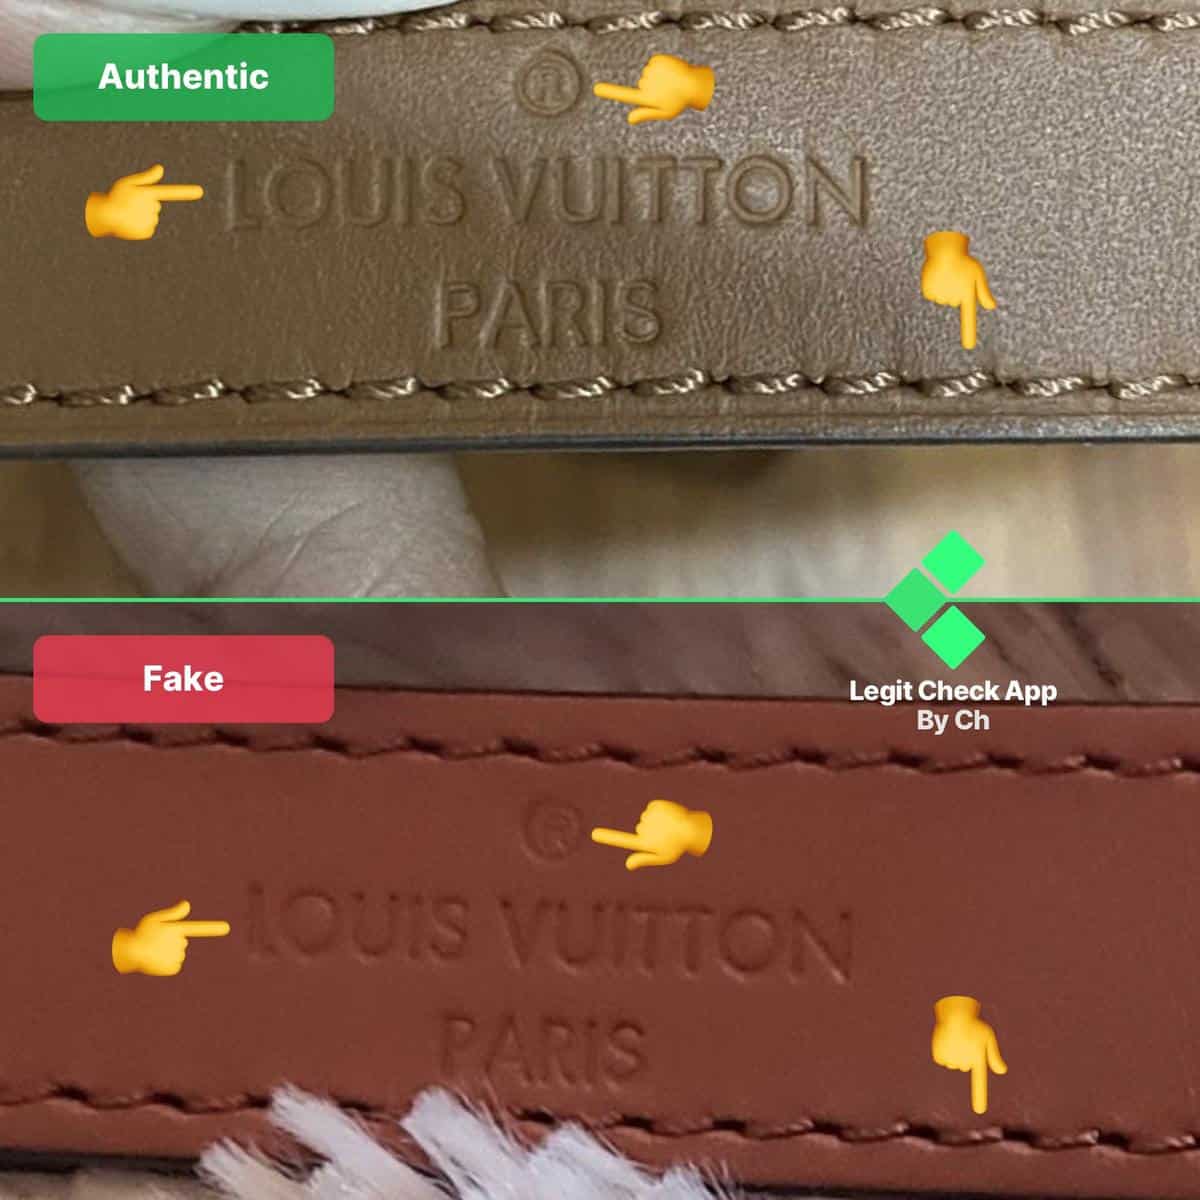 Louis Vuitton UNBOXING ! 👜 Mini Dauphine 